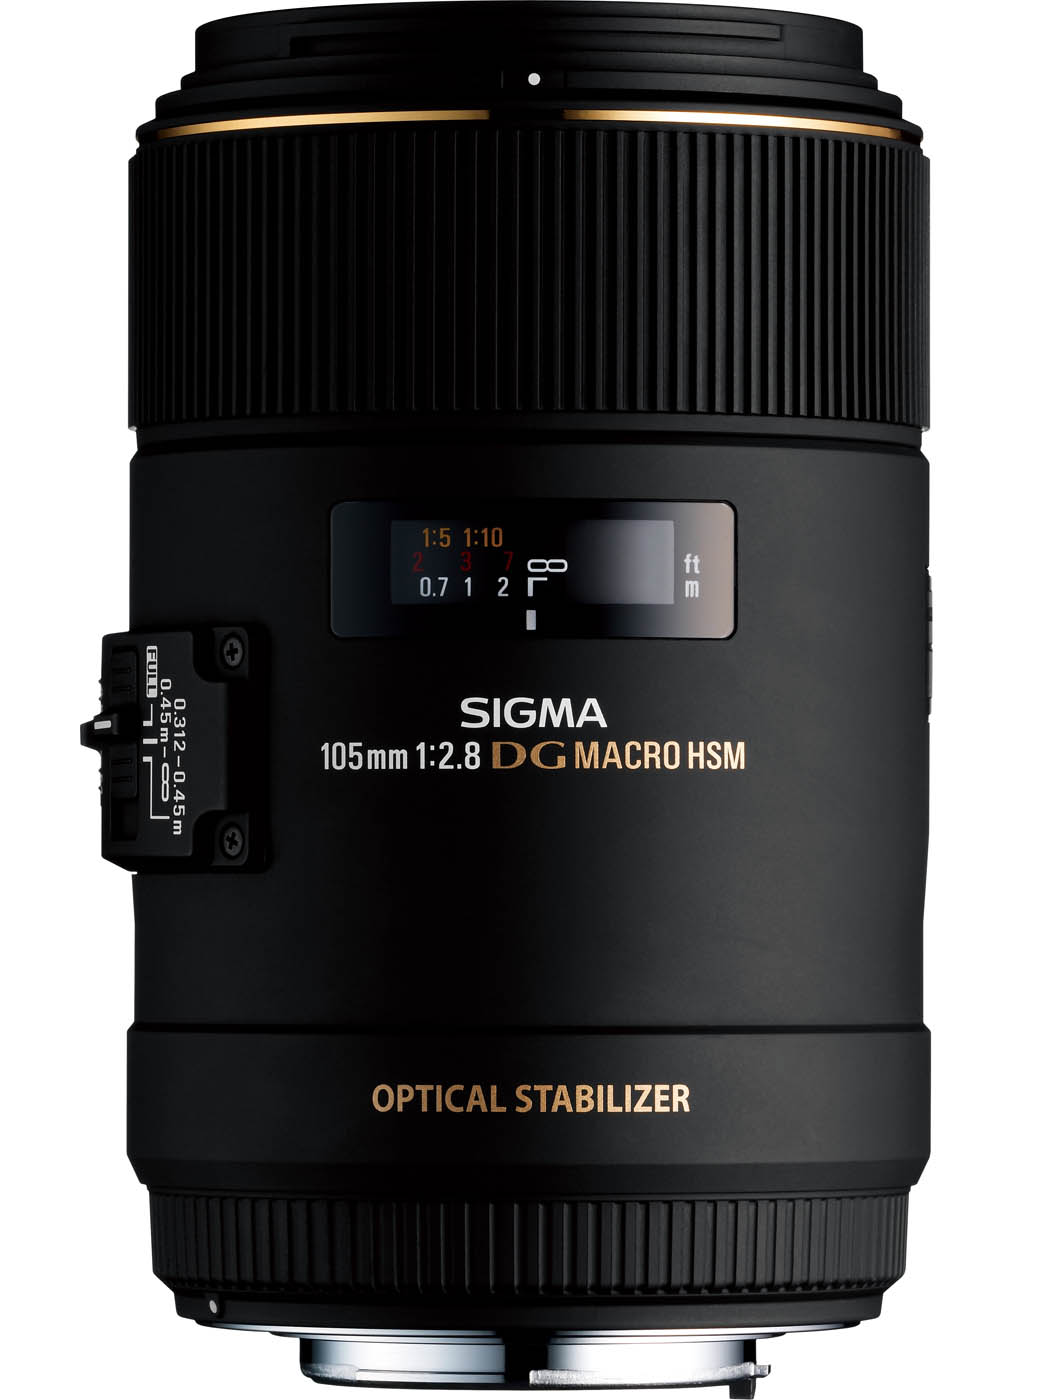 Sigma 105mm macro. Sigma af 105mm f/2.8 macro. Sigma 105mm f2.8 ex DG os HSM macro. Sigma af 105mm f/2.8 ex DG os HSM macro Canon EF. Sigma 105 2.8 macro.